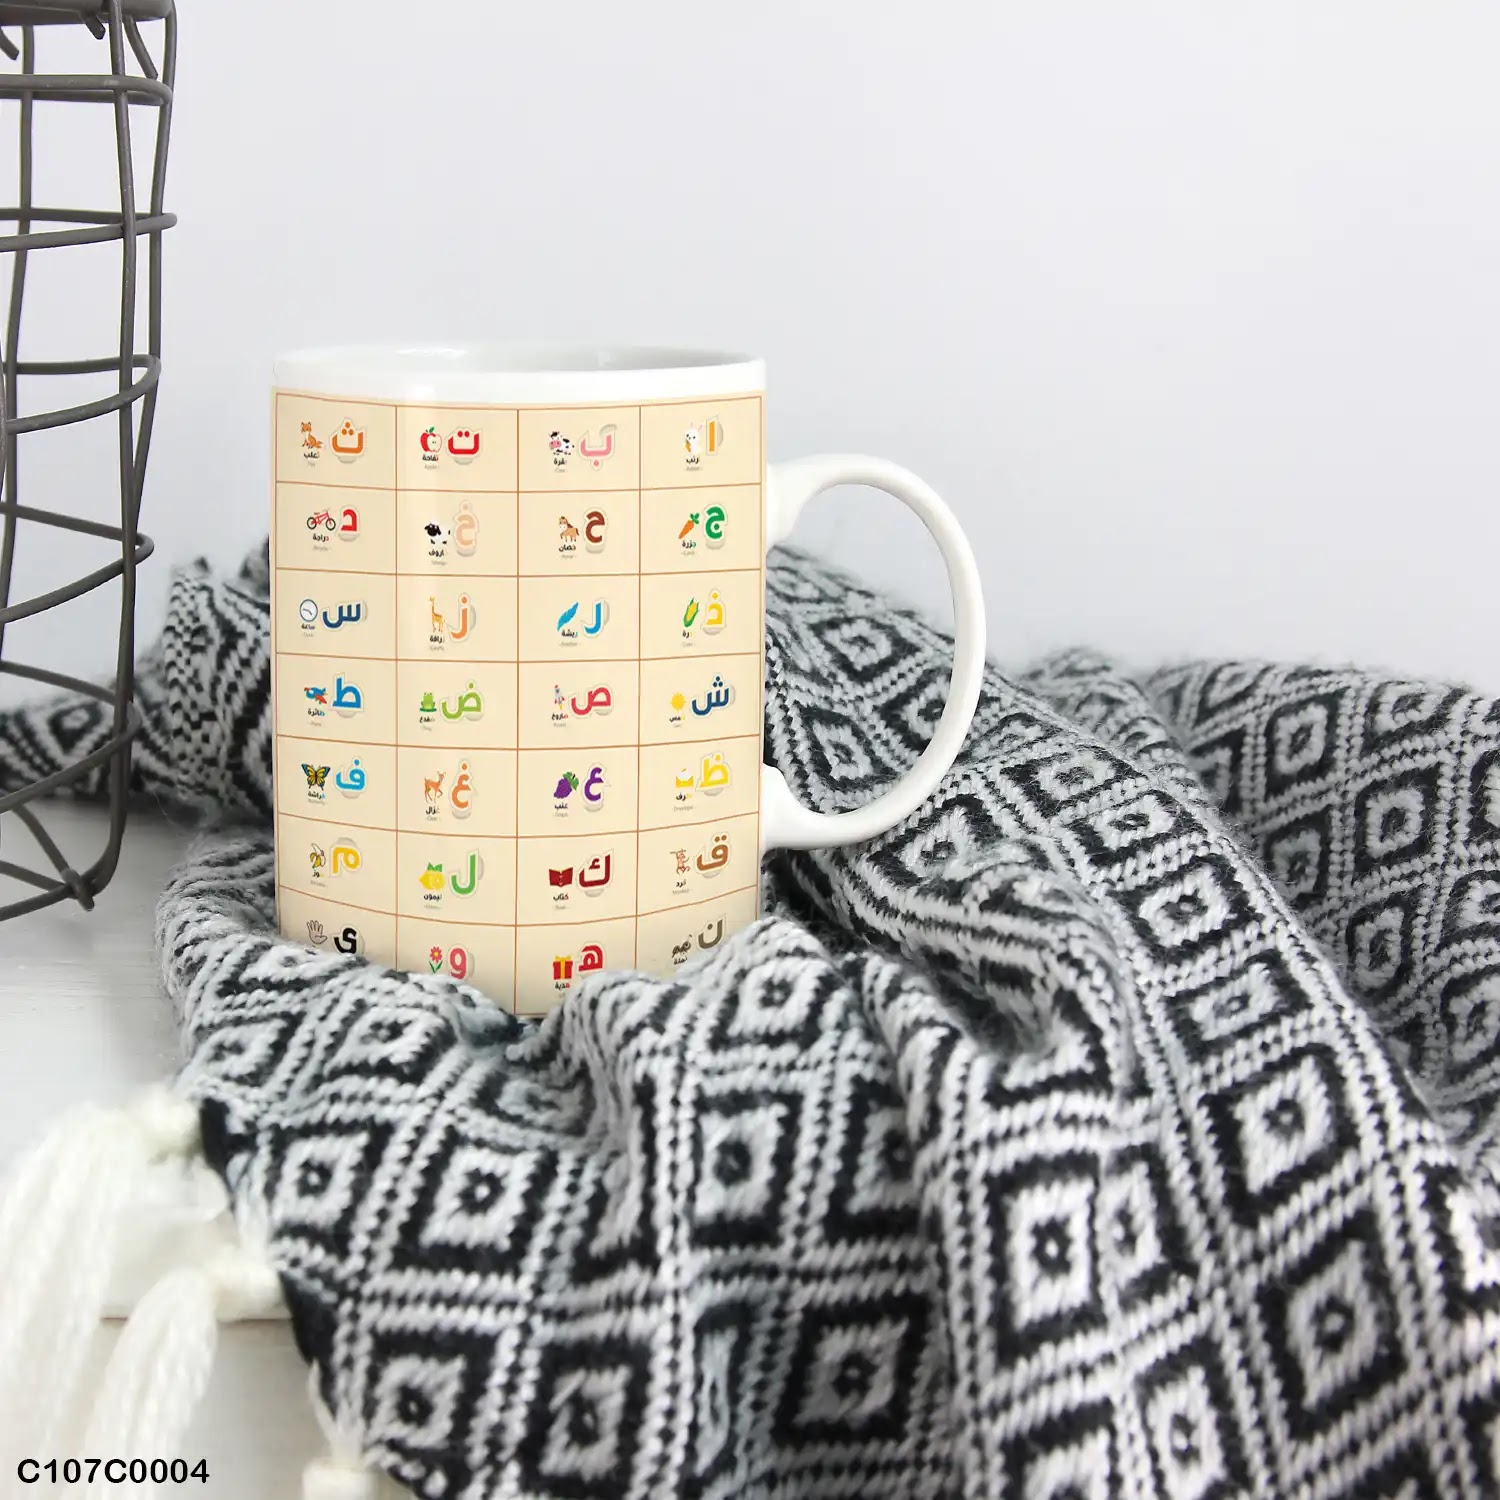 A mug (cup) printed with an Arabic alphabet